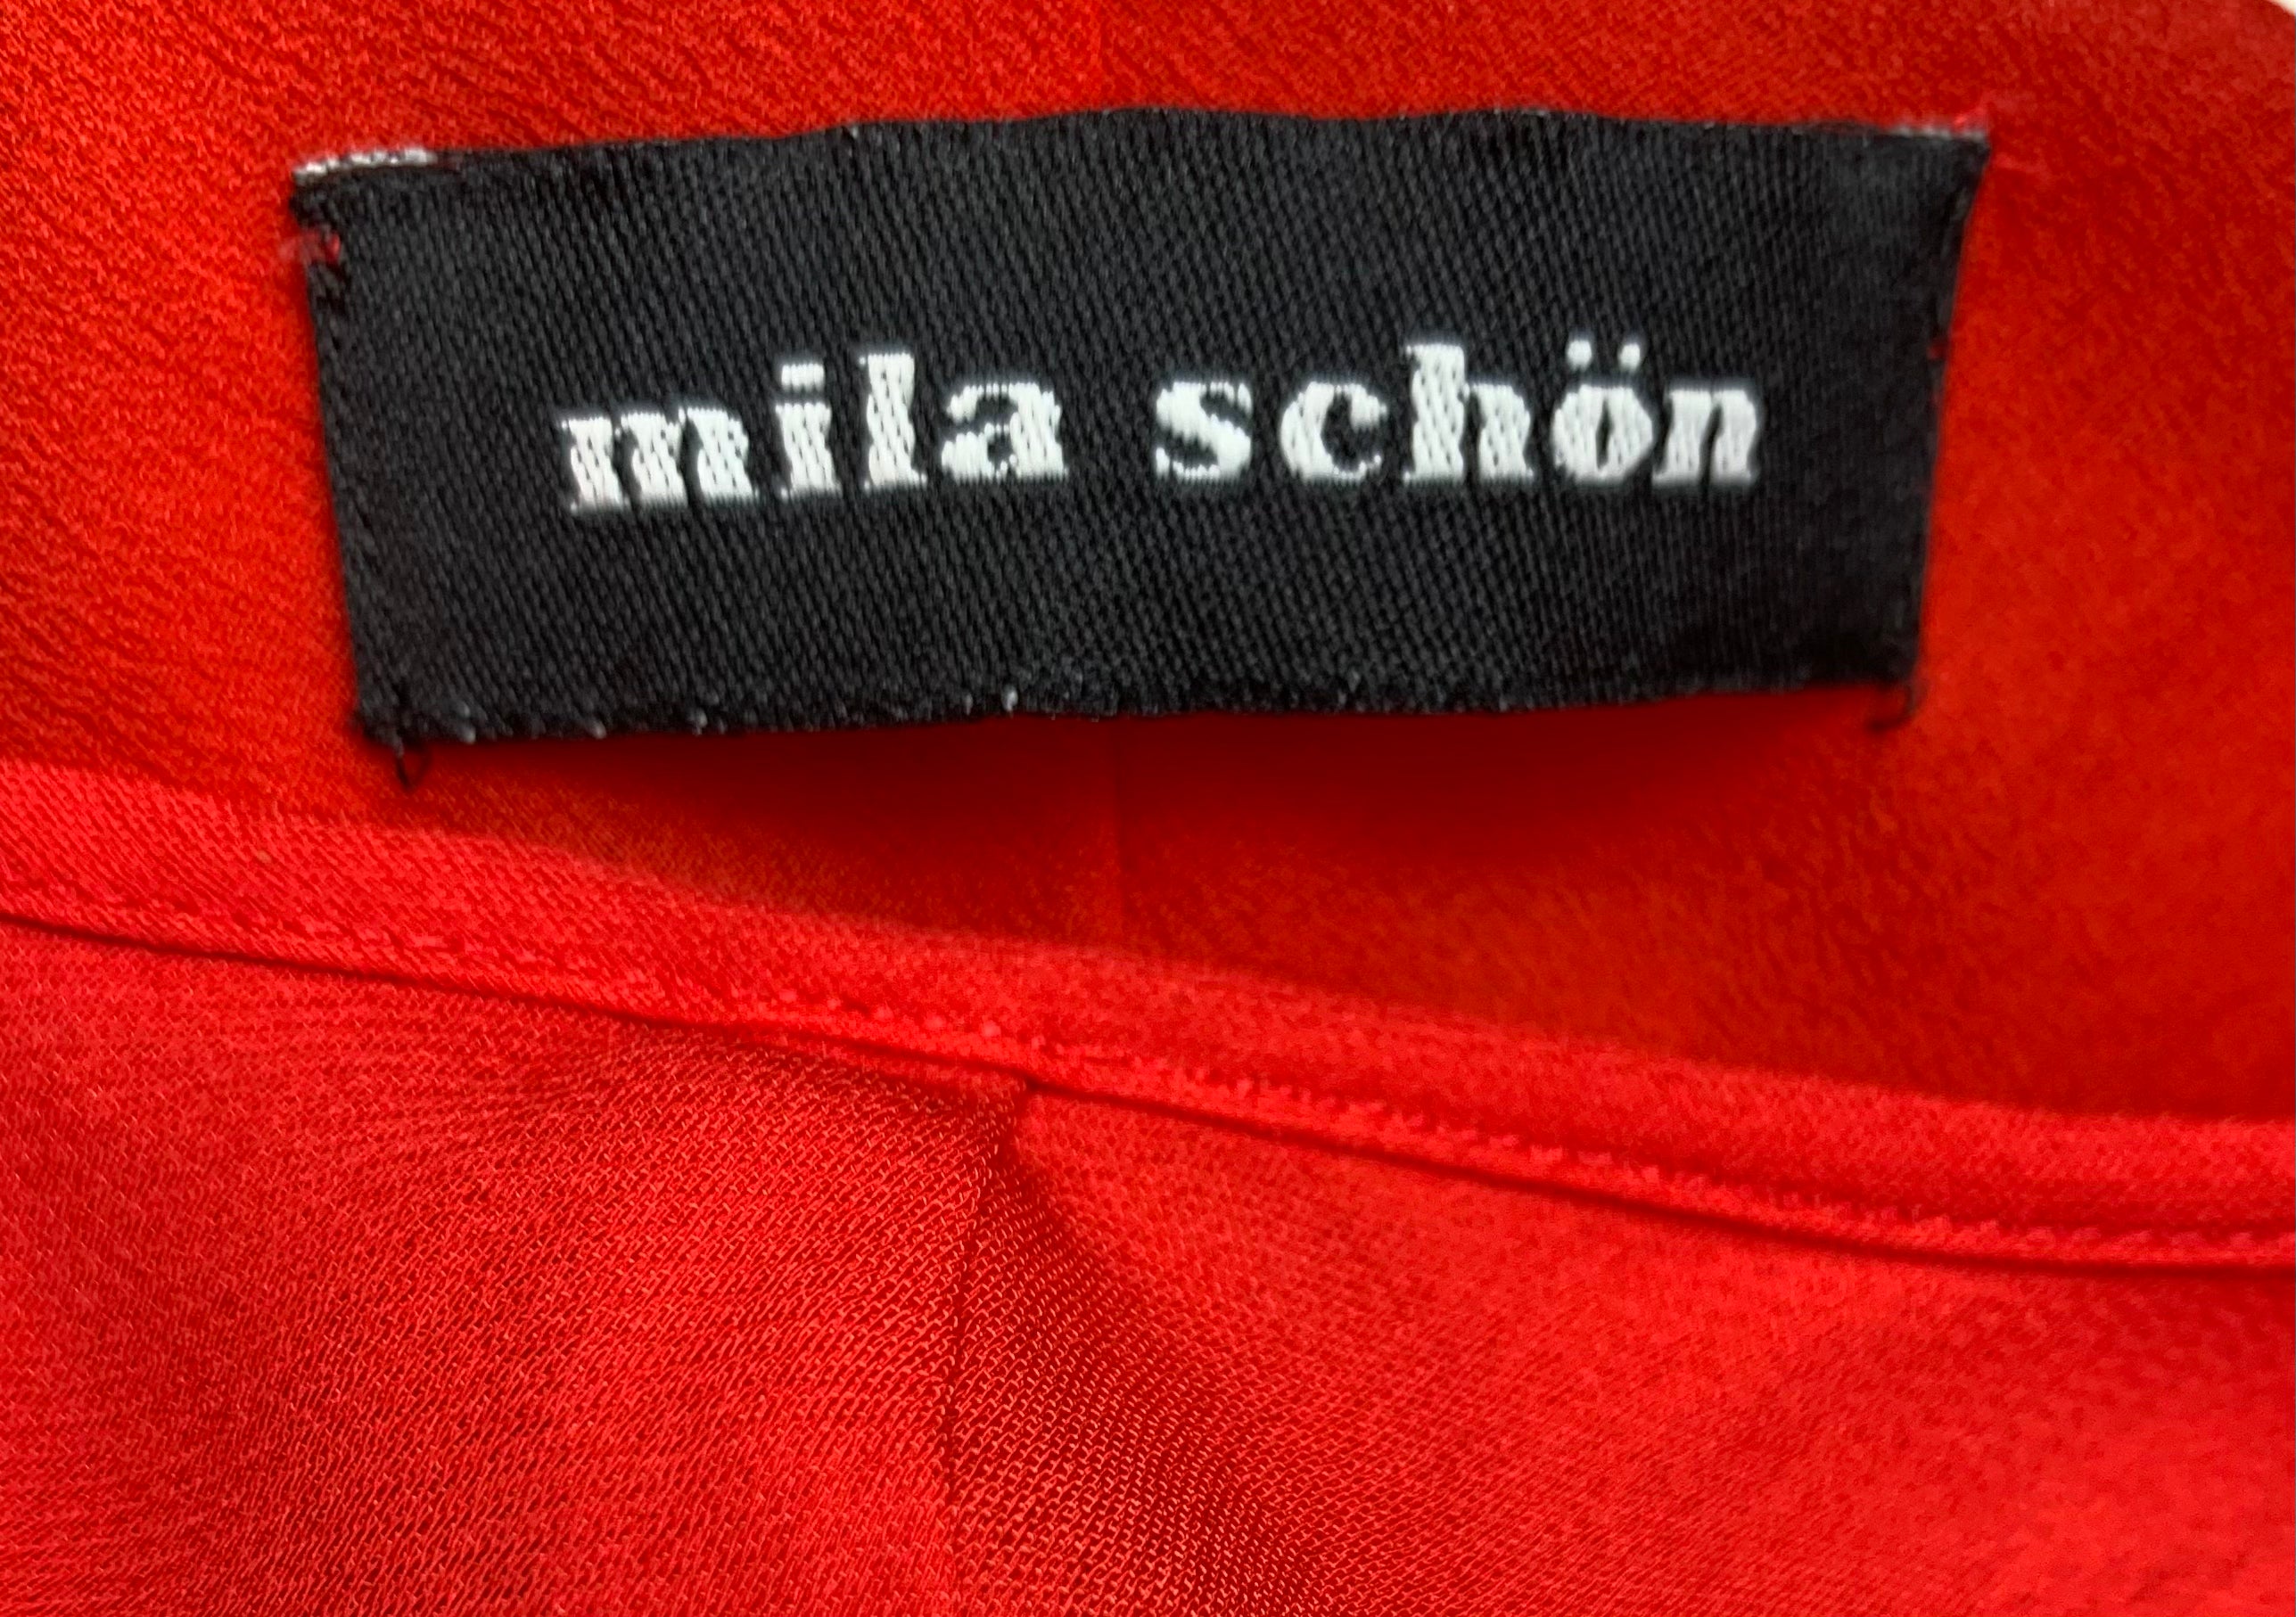 Mila Schön Cherry Red Asymmetrical Ruffled Detail Gown LABEL 5/5